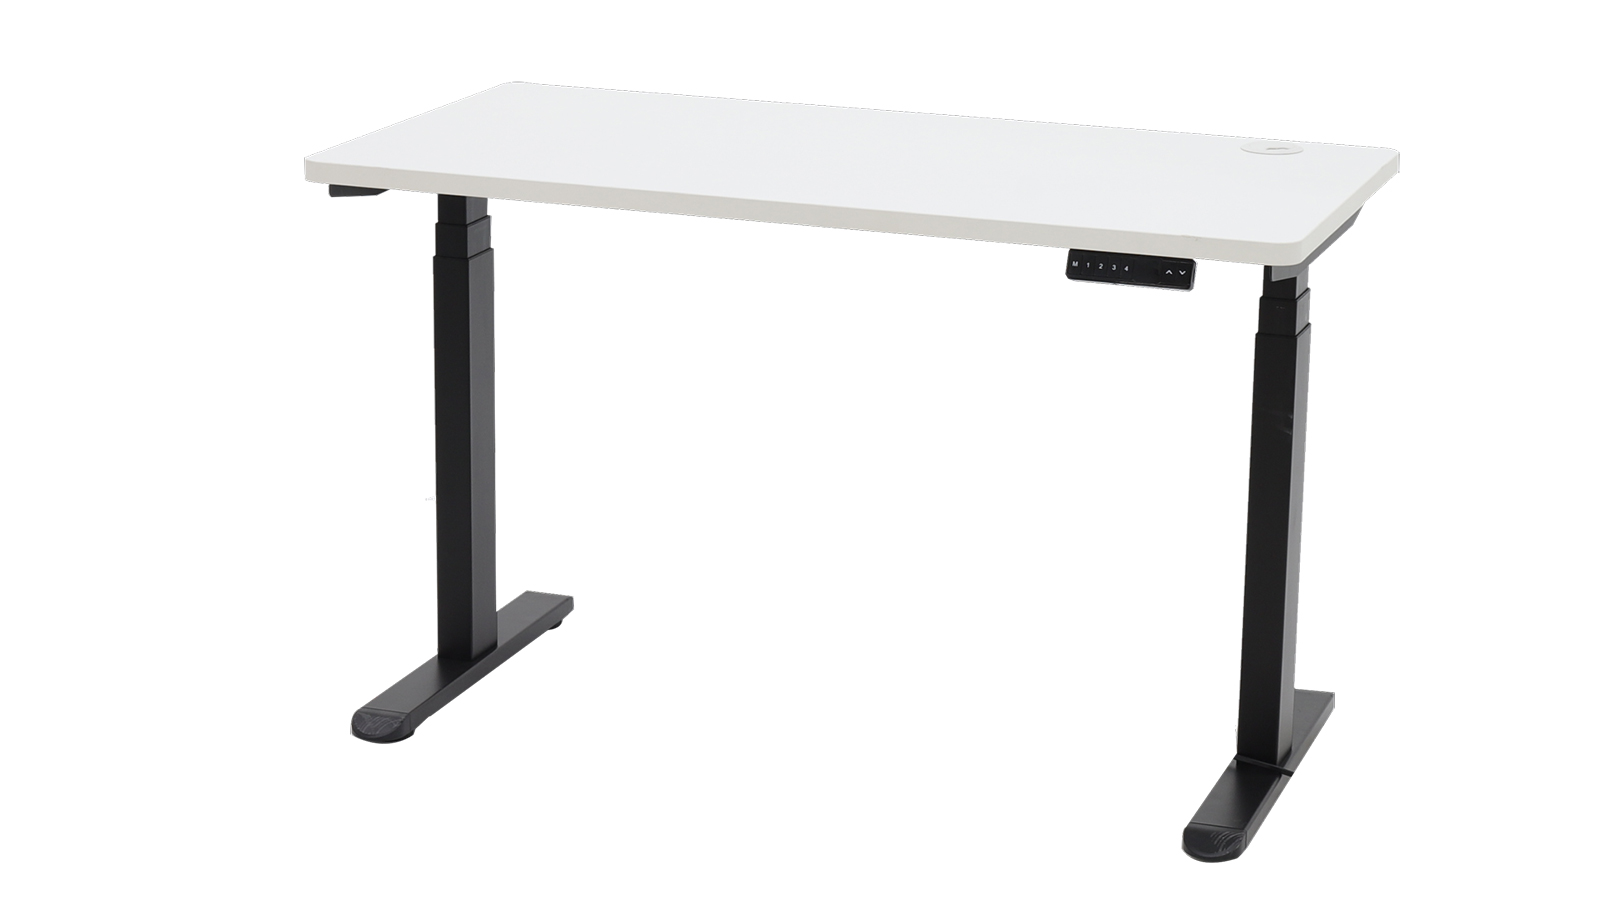 Hipso Adjustable Standing Desk - 51 x 24